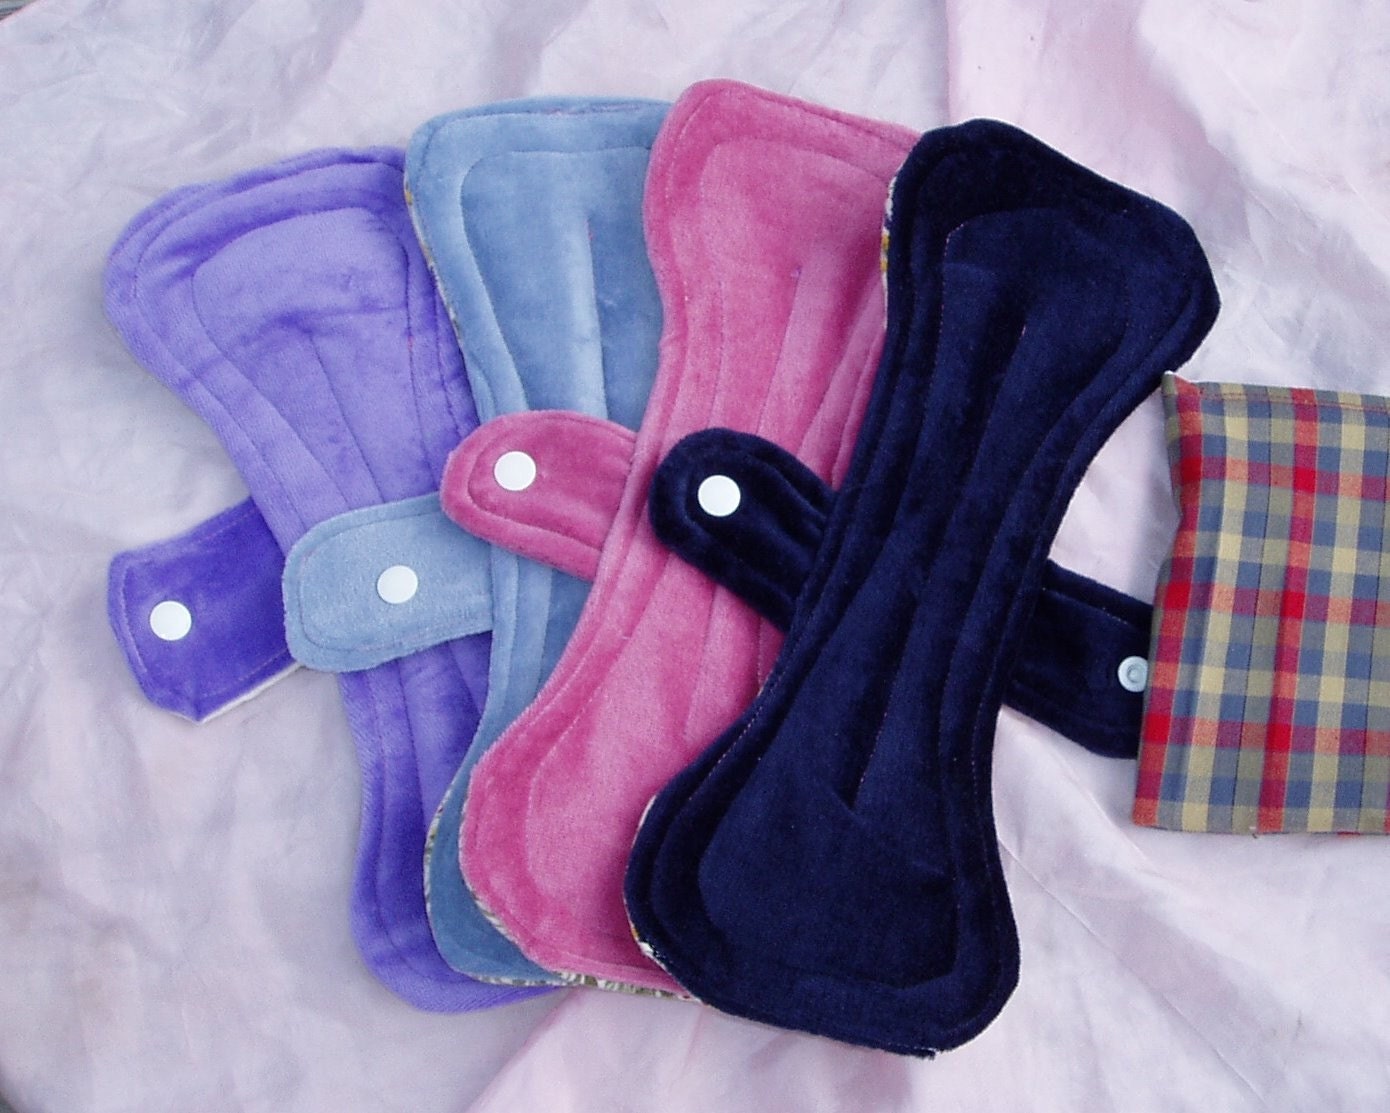 Benefits of using cloth menstrual pads